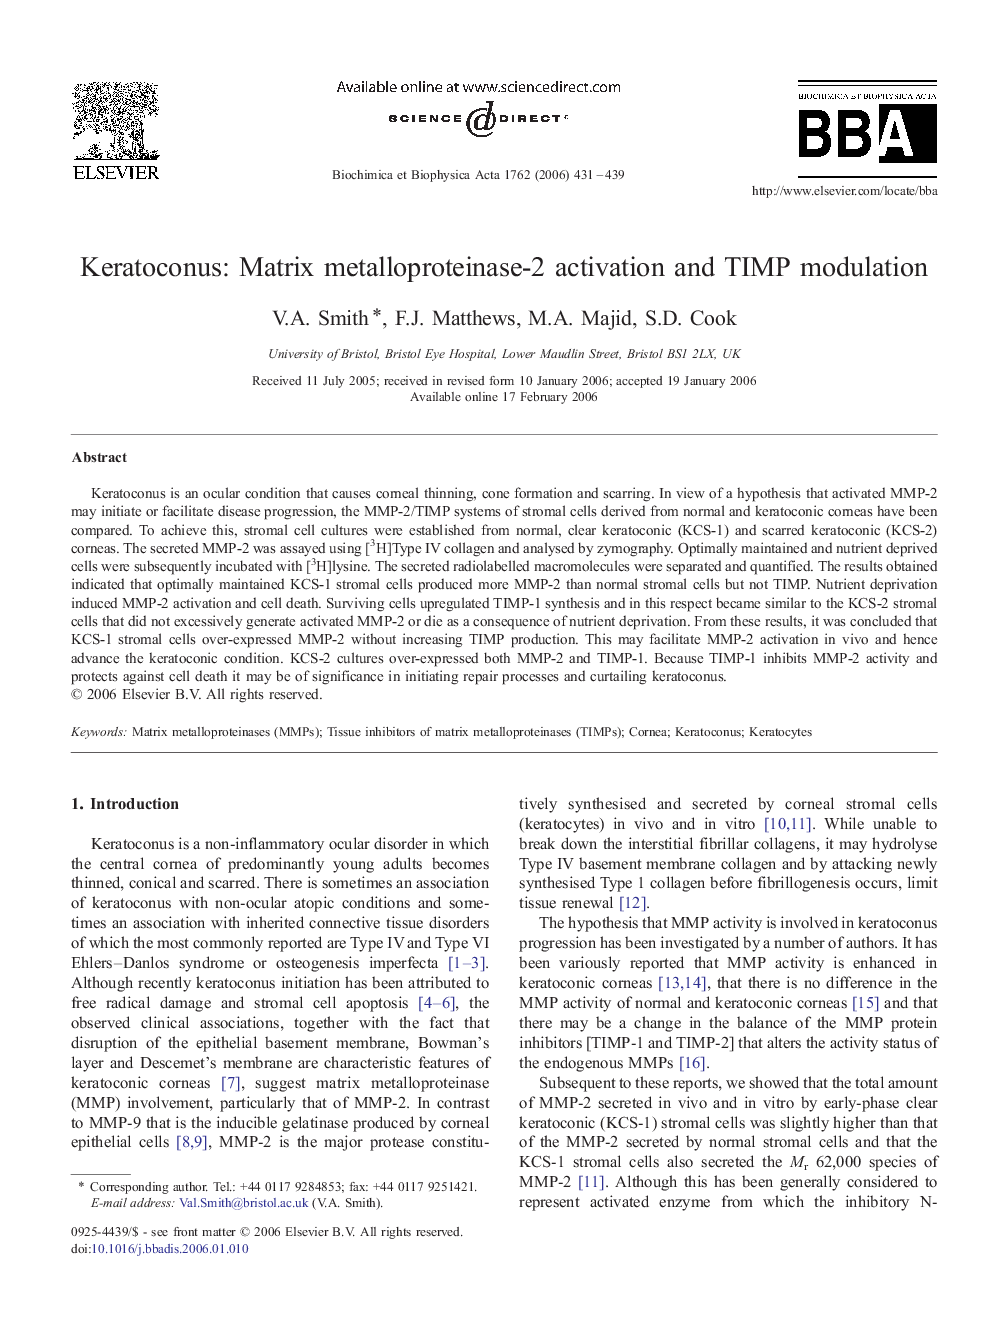 Keratoconus: Matrix metalloproteinase-2 activation and TIMP modulation